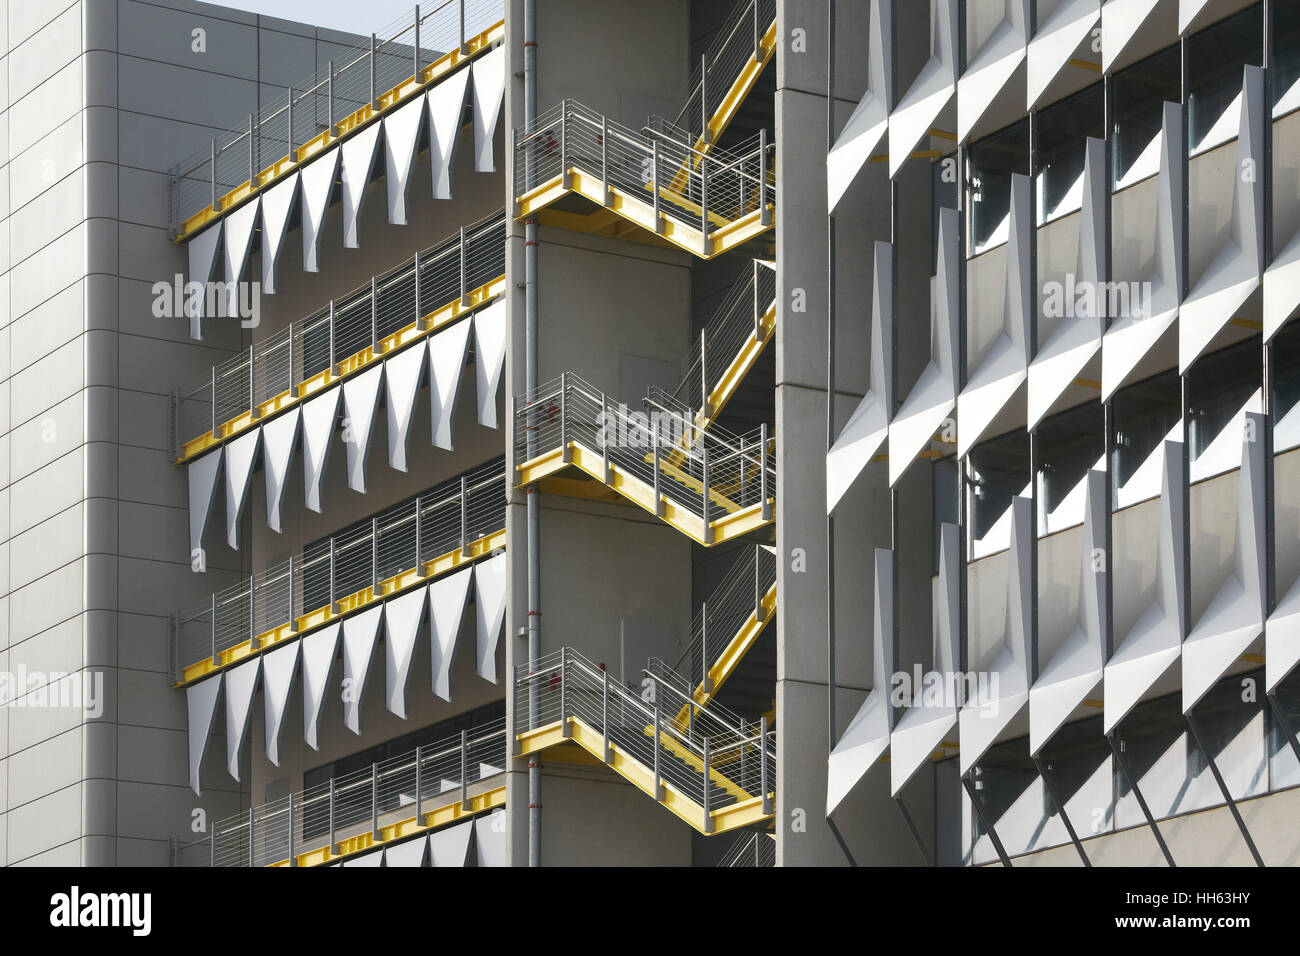 Aluminium sun shading system and stairways of exterior facade. Siemens ...